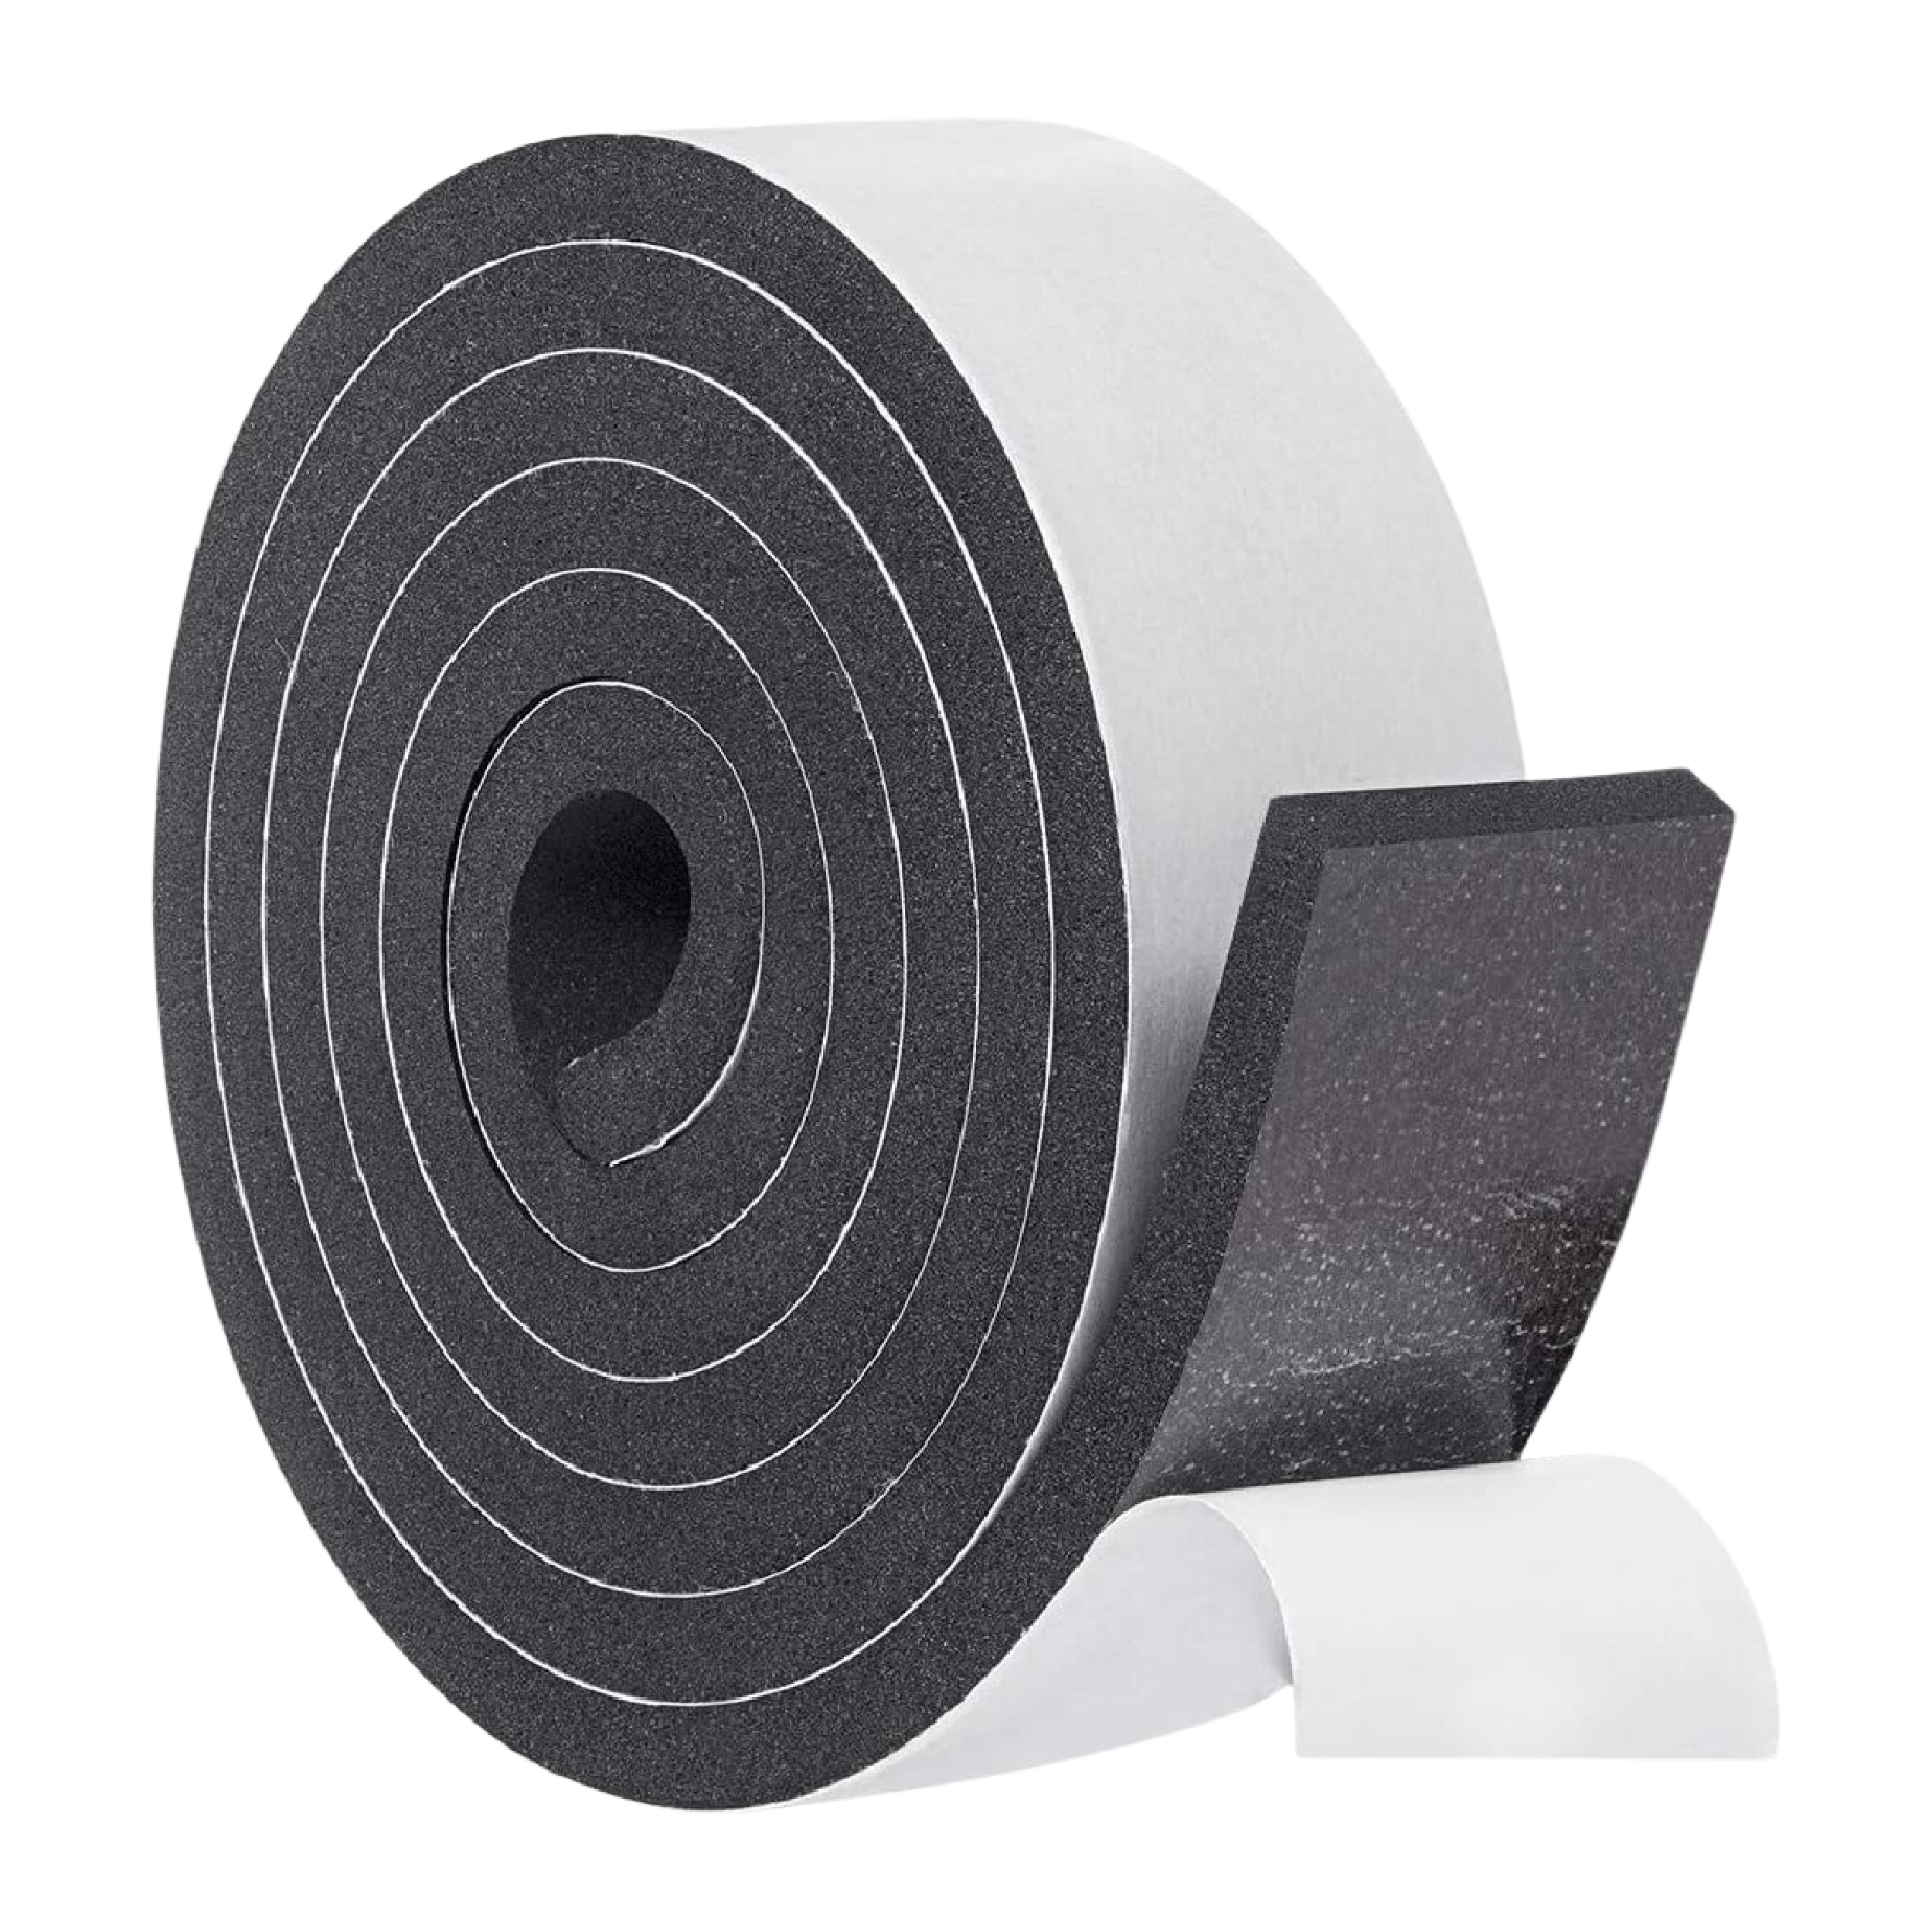 Hat Size Tape Eva Hat Size Reducer Foam Reducing Tape Roll - Temu